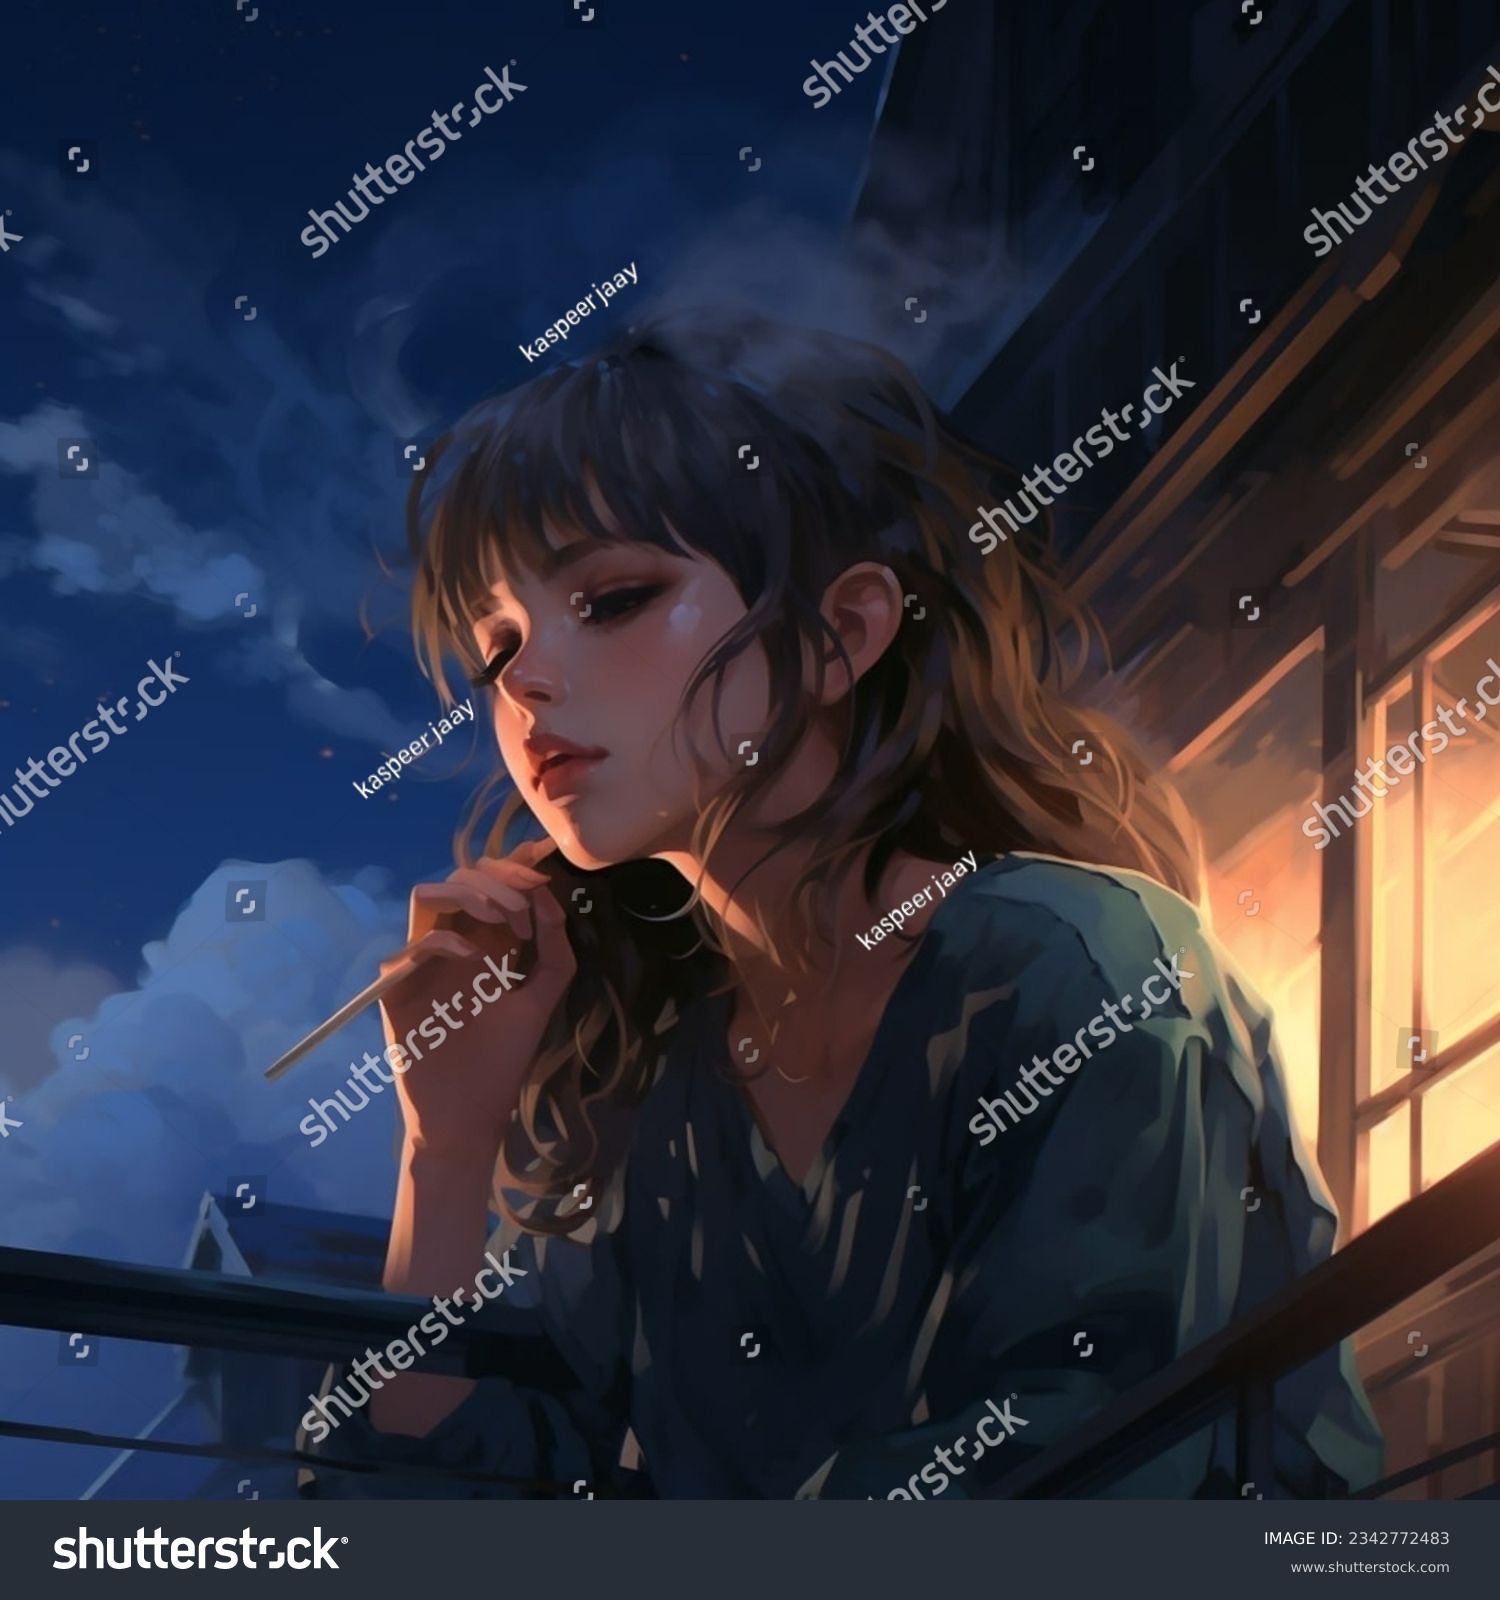 Anime Girl Smoking higareda penetrada